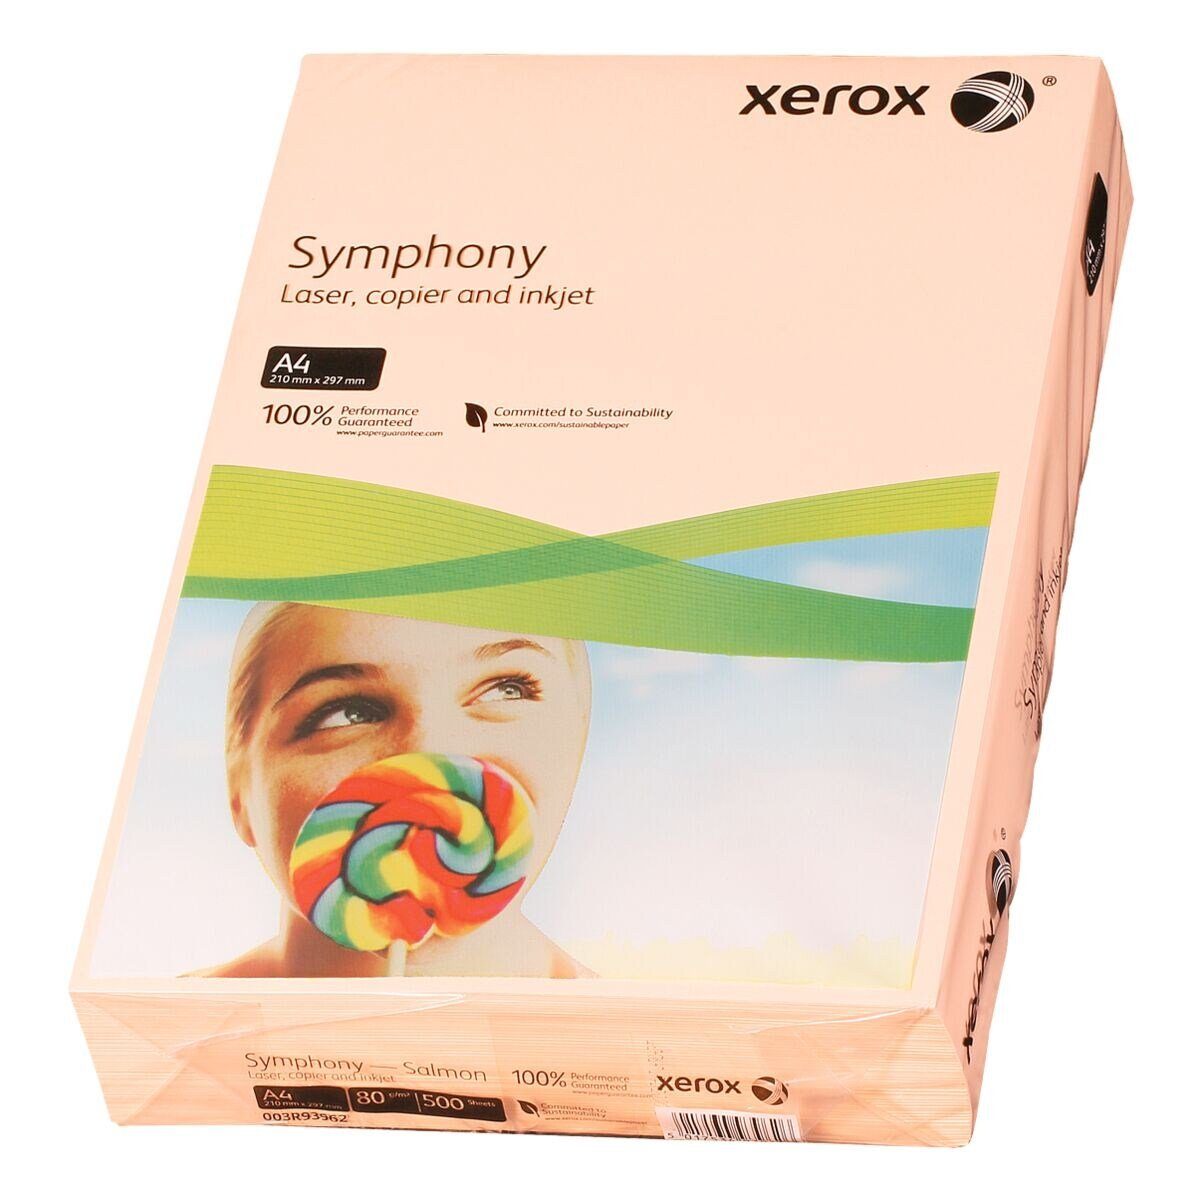 Xerox Drucker- und Kopierpapier Symphony, Pastellfarben, Format DIN A4, 80 g/m², 500 Blatt lachs